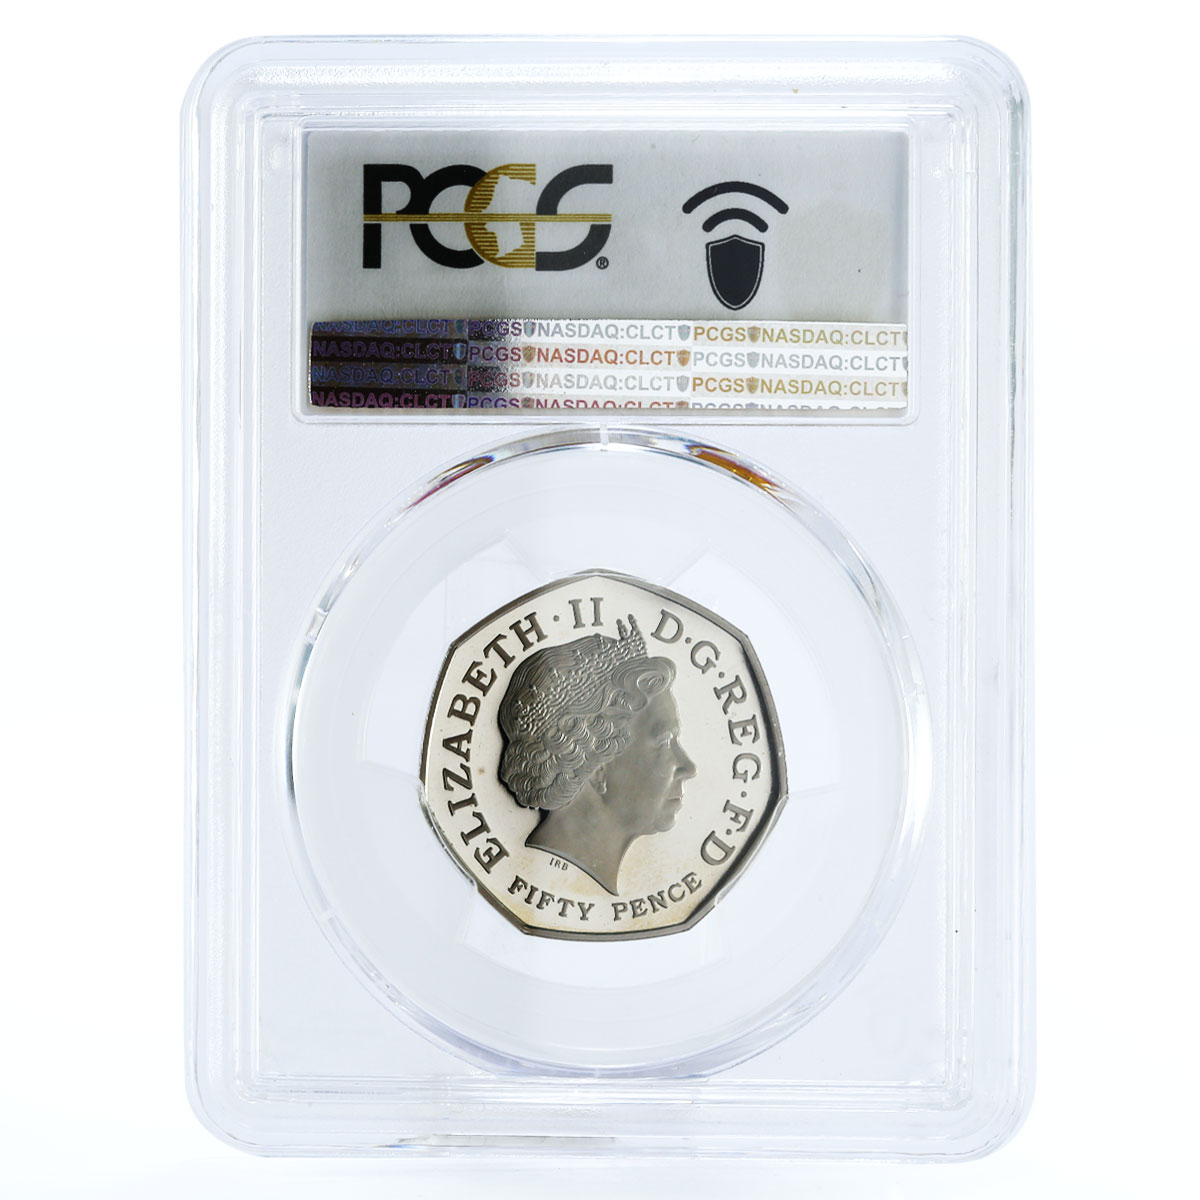 Britain 50 pence 250 Years of Kew Gardens PR69 PCGS proof nickel coin 2009